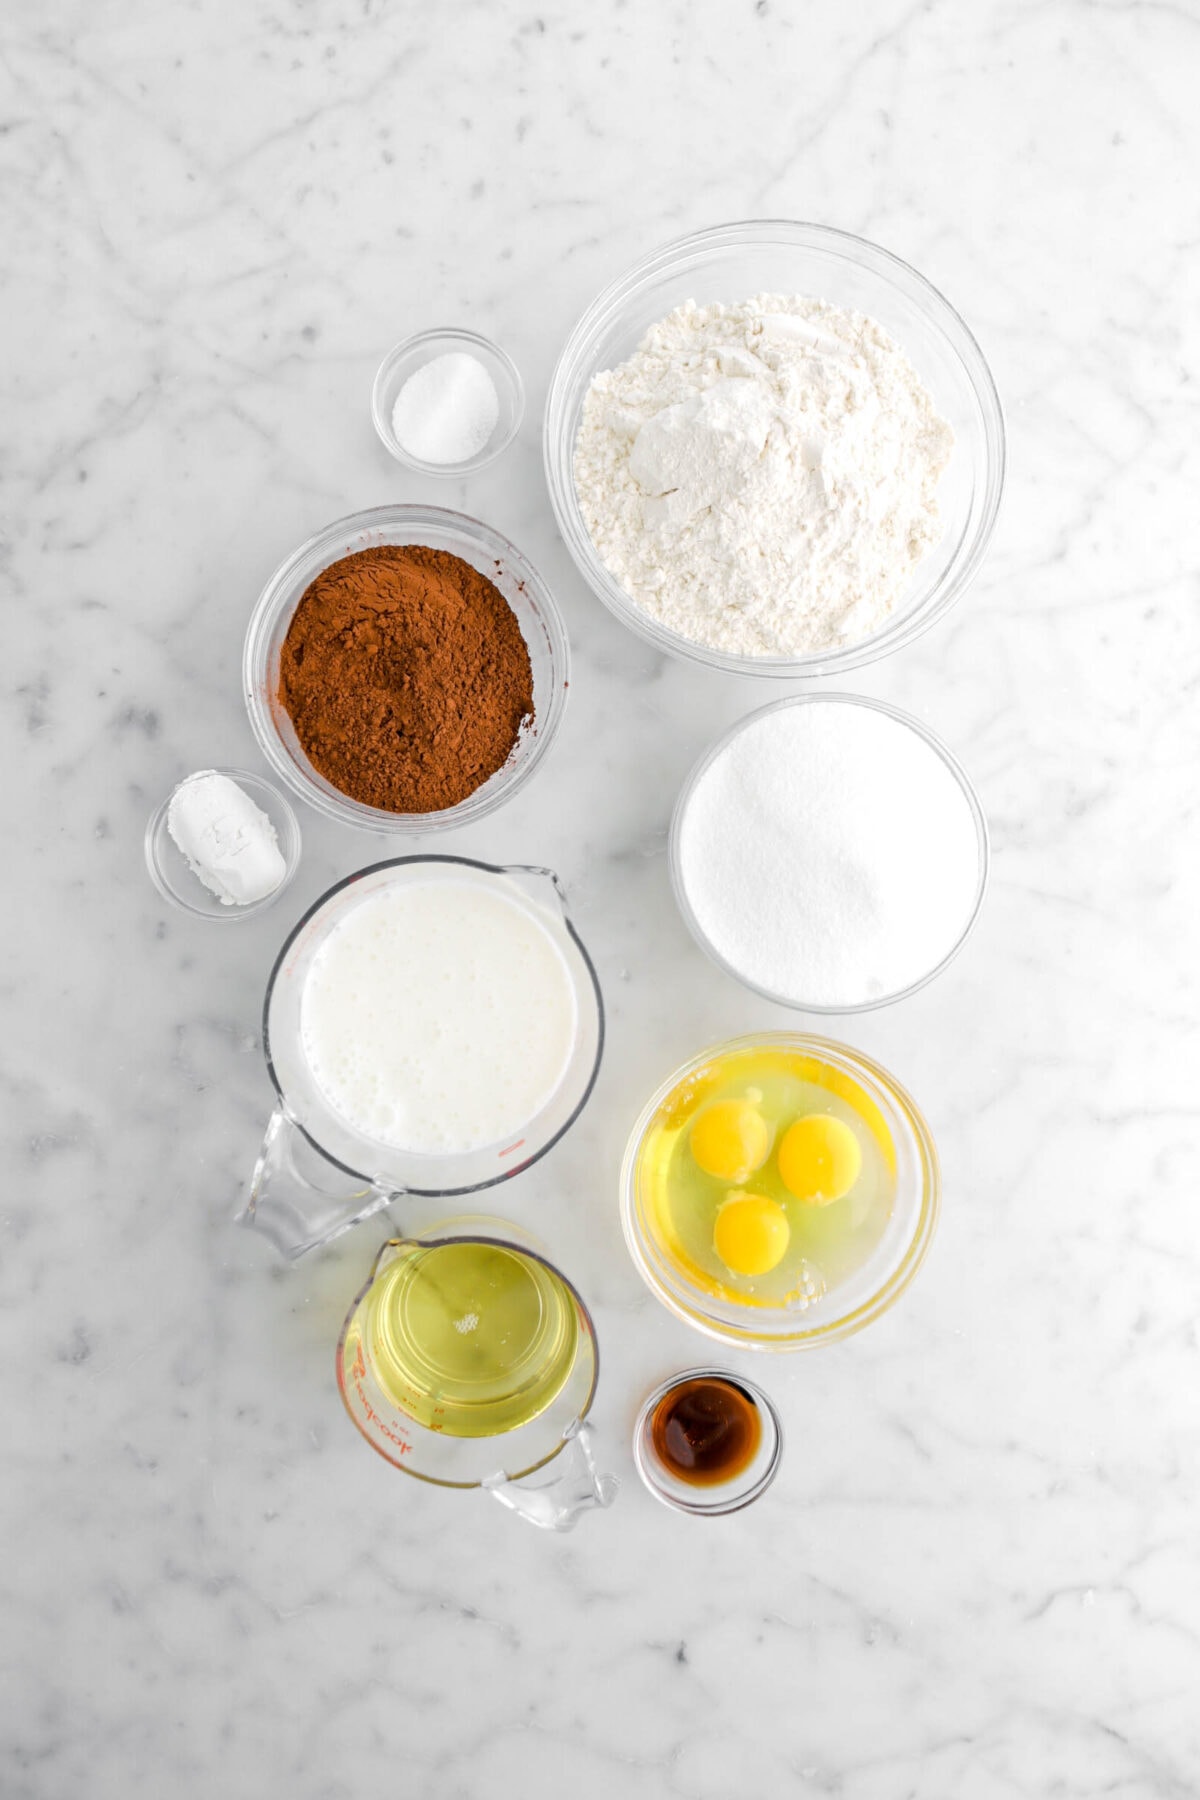 salt, flour, cocoa powder, baking powder, sugar, milk, eggs, oil, and vanilla on marble surface.